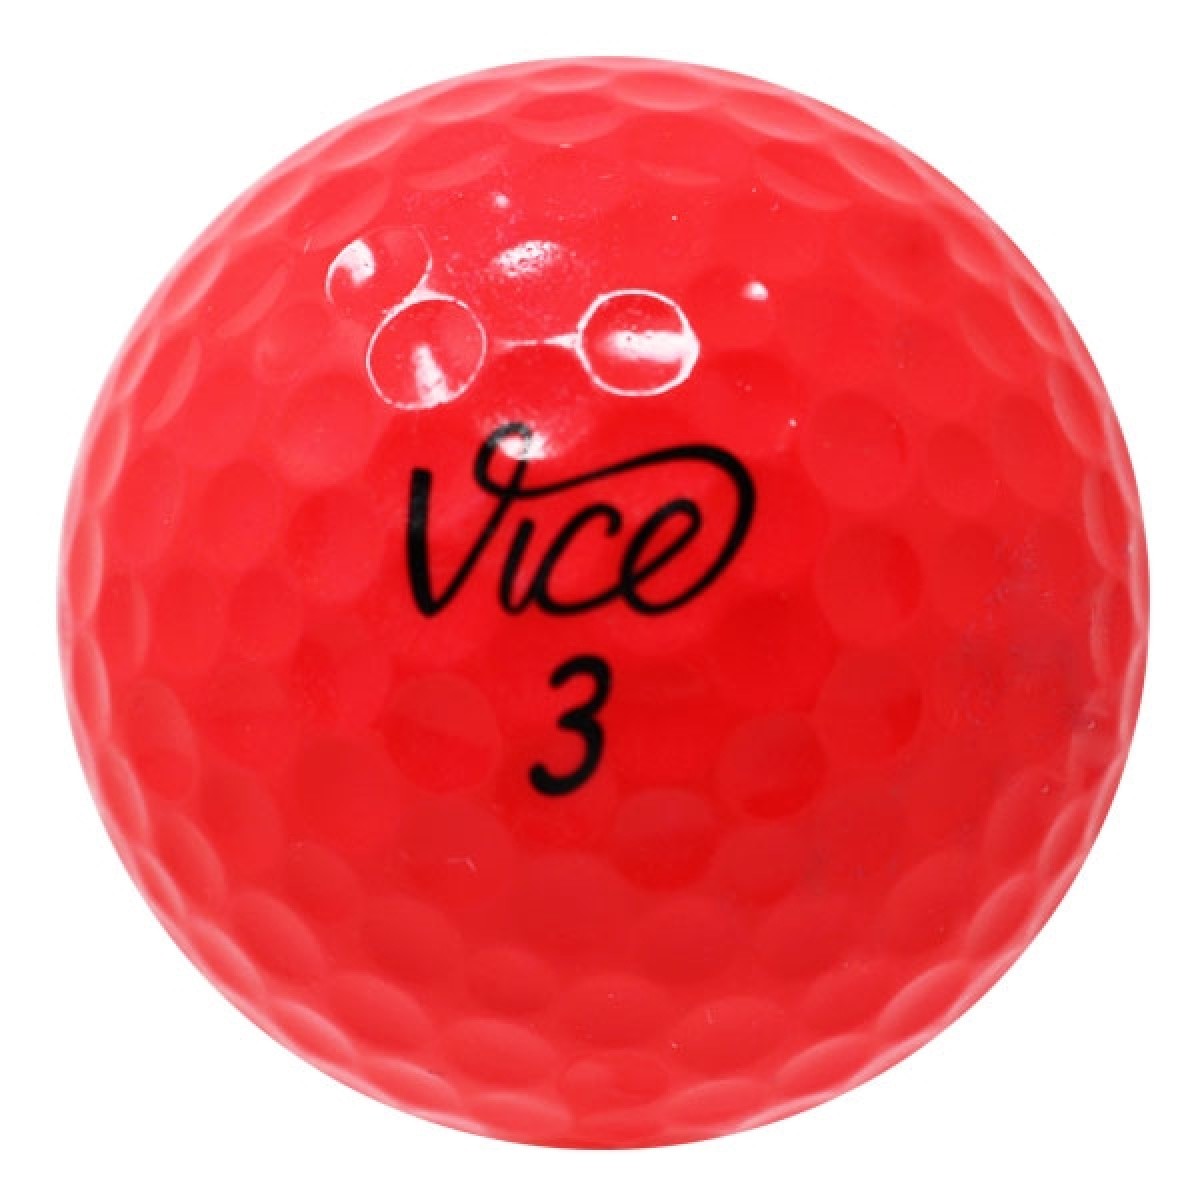 Vice Pro and Pro Plus Mix Red Used Golf Balls | Lostgolfballs.com